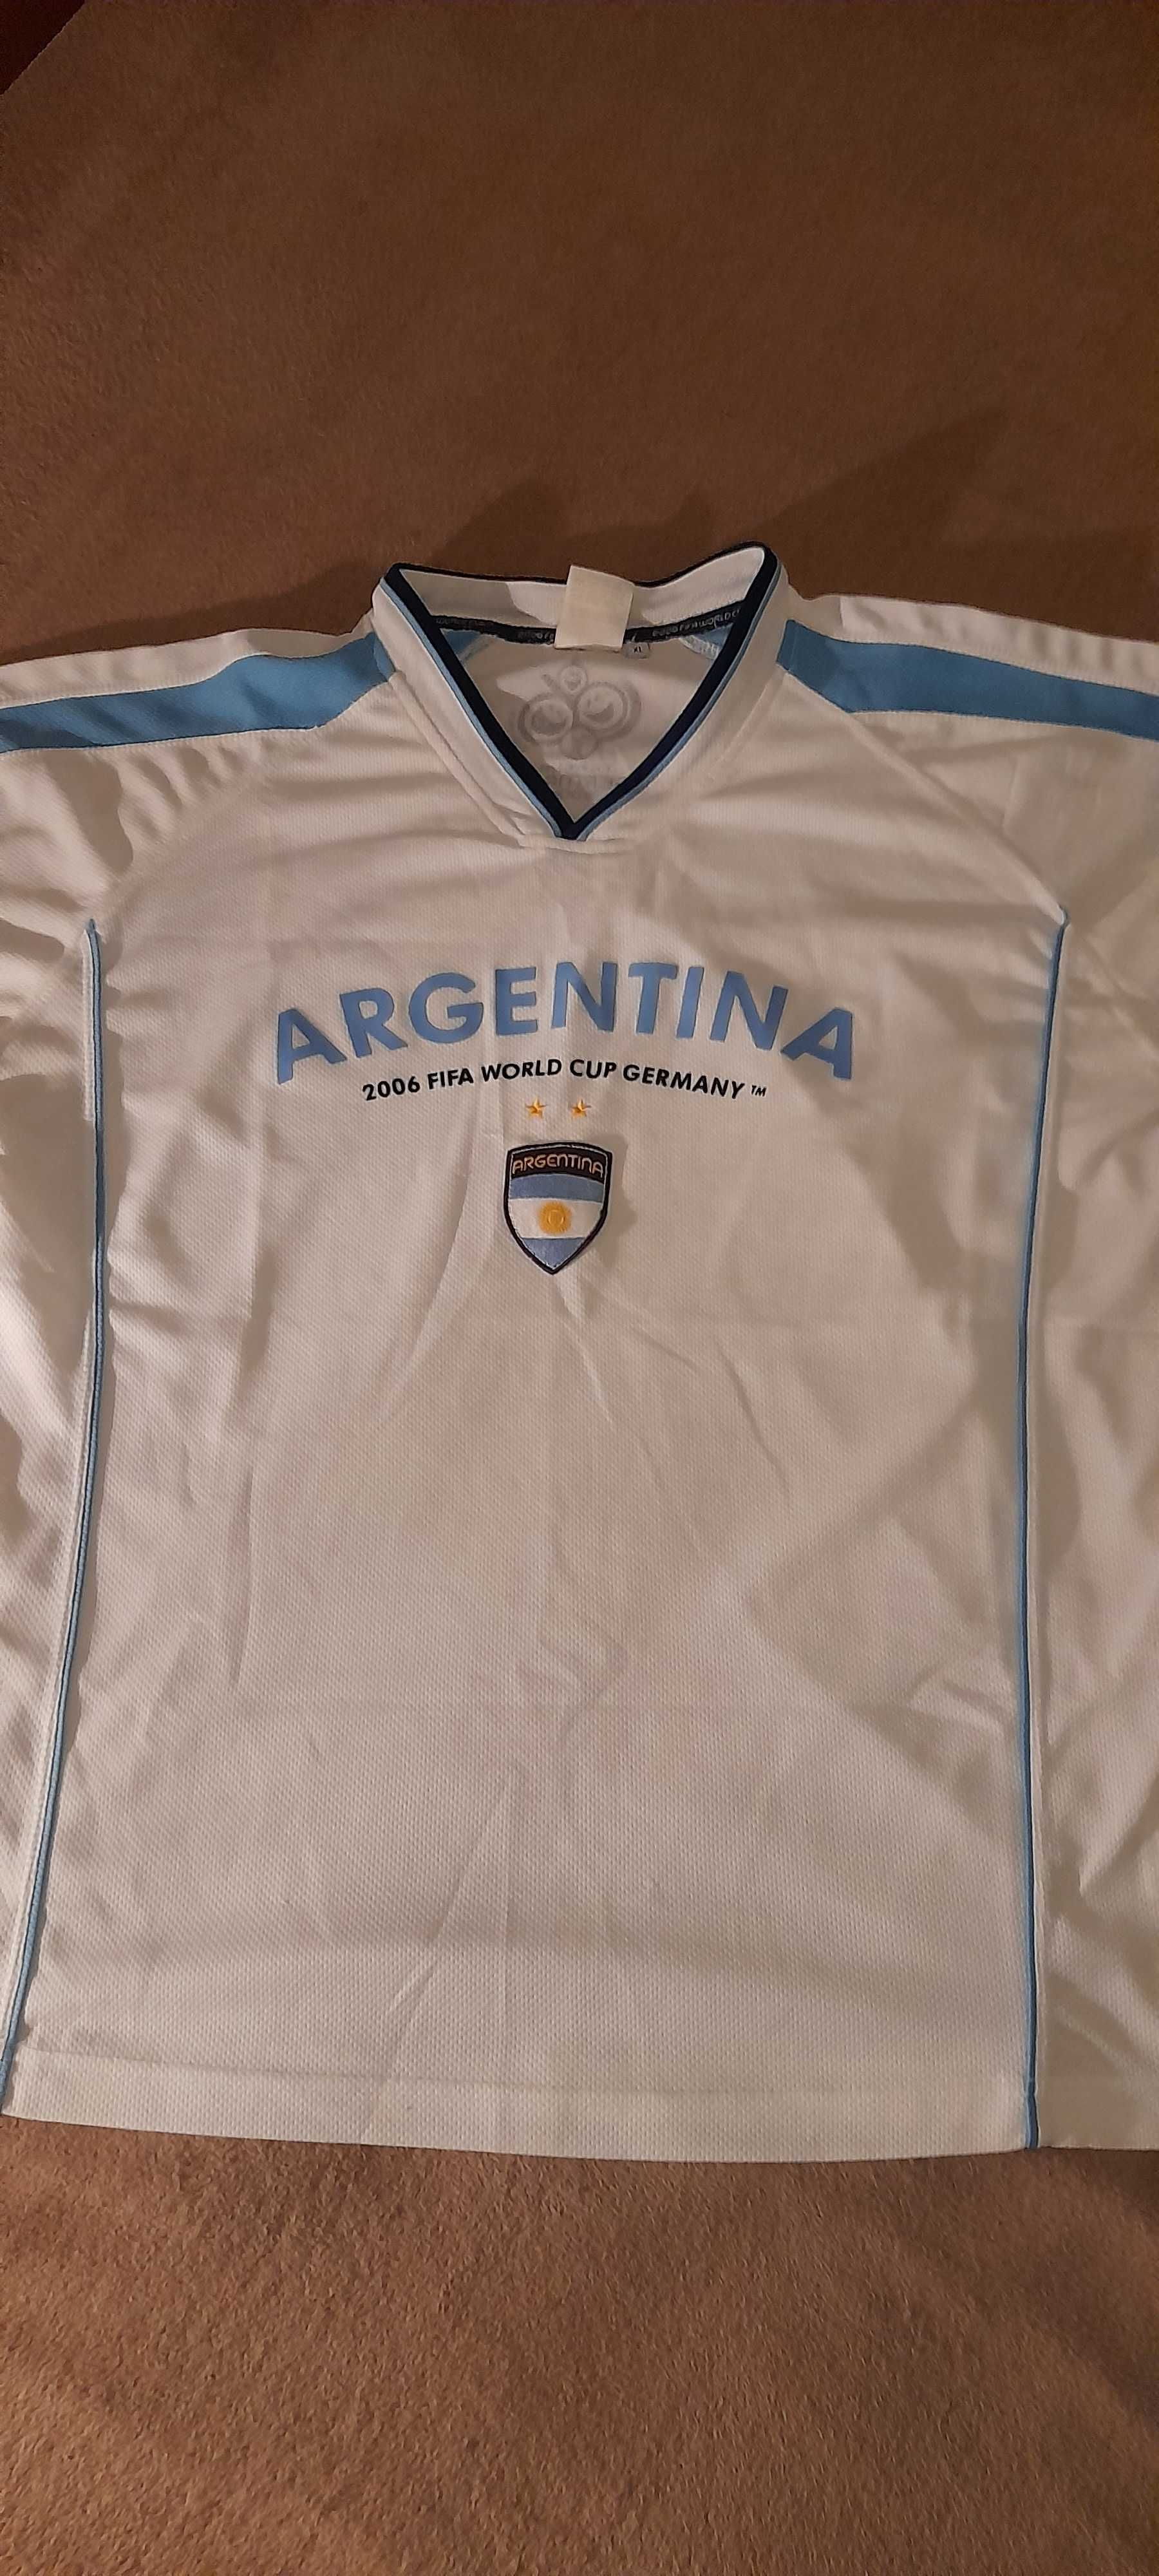 Camisola da Argentina euro 2006